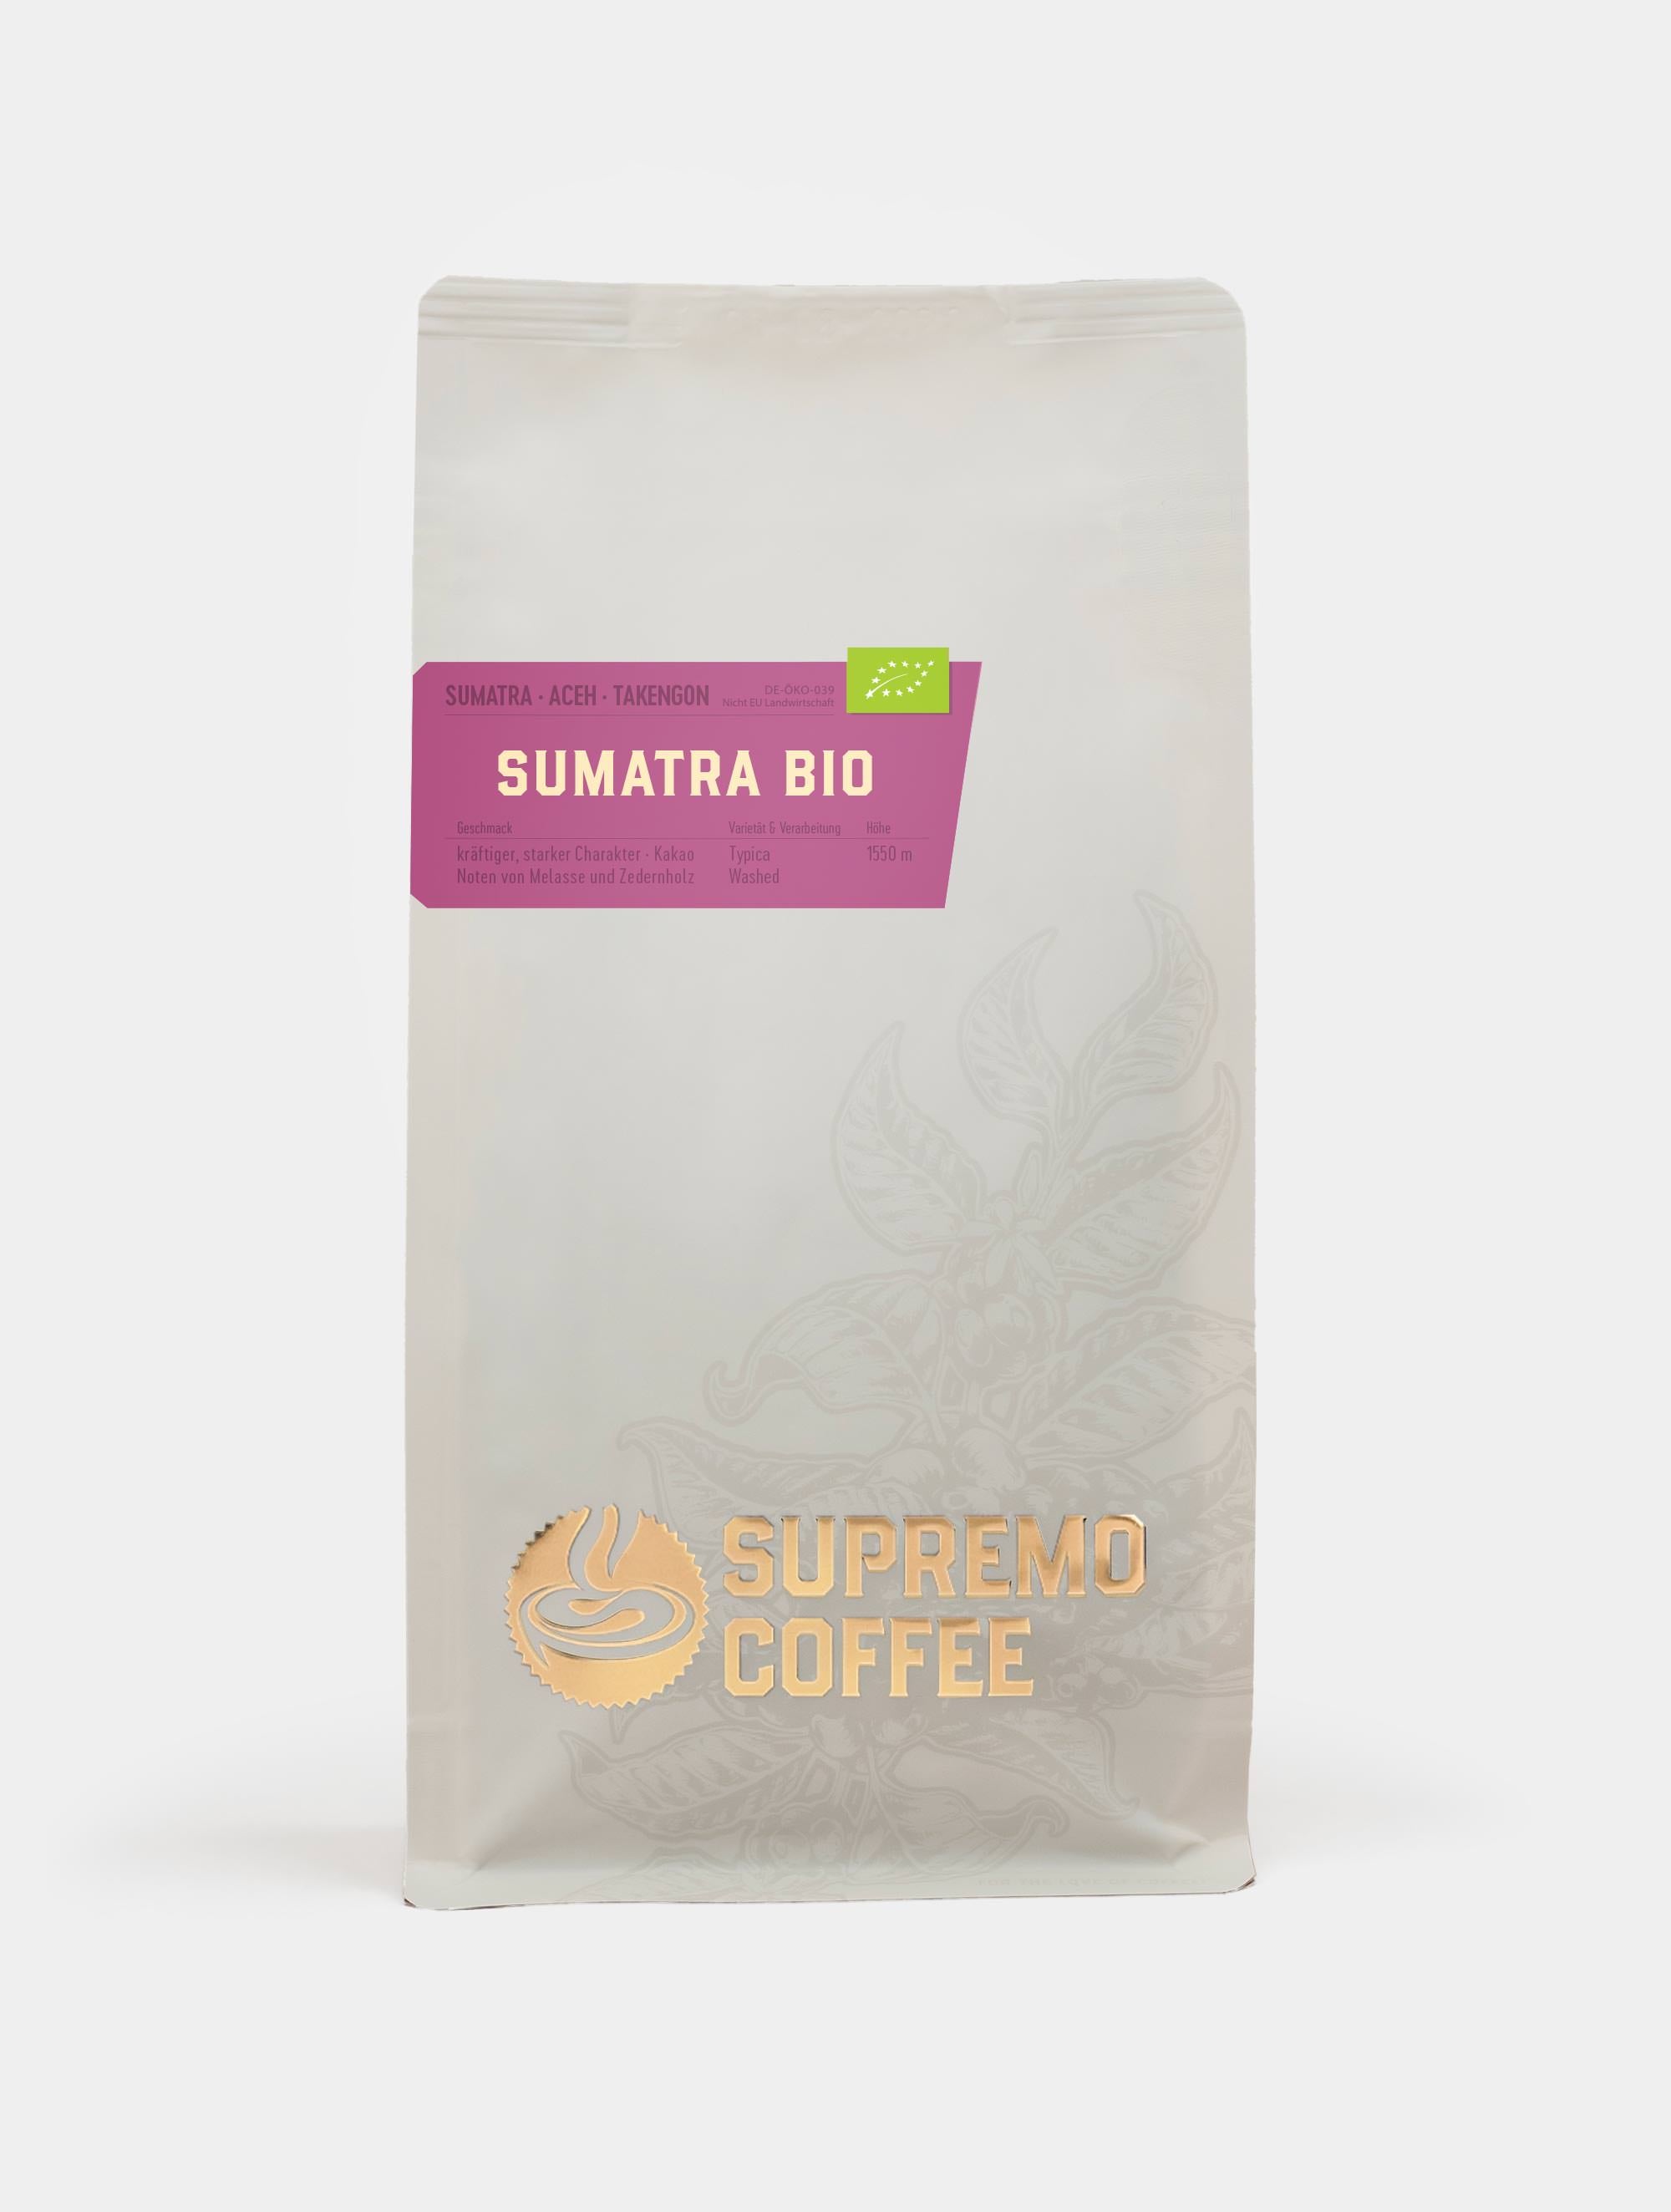 Sumatra Bio, Sumatra | SUPREMO Coffee